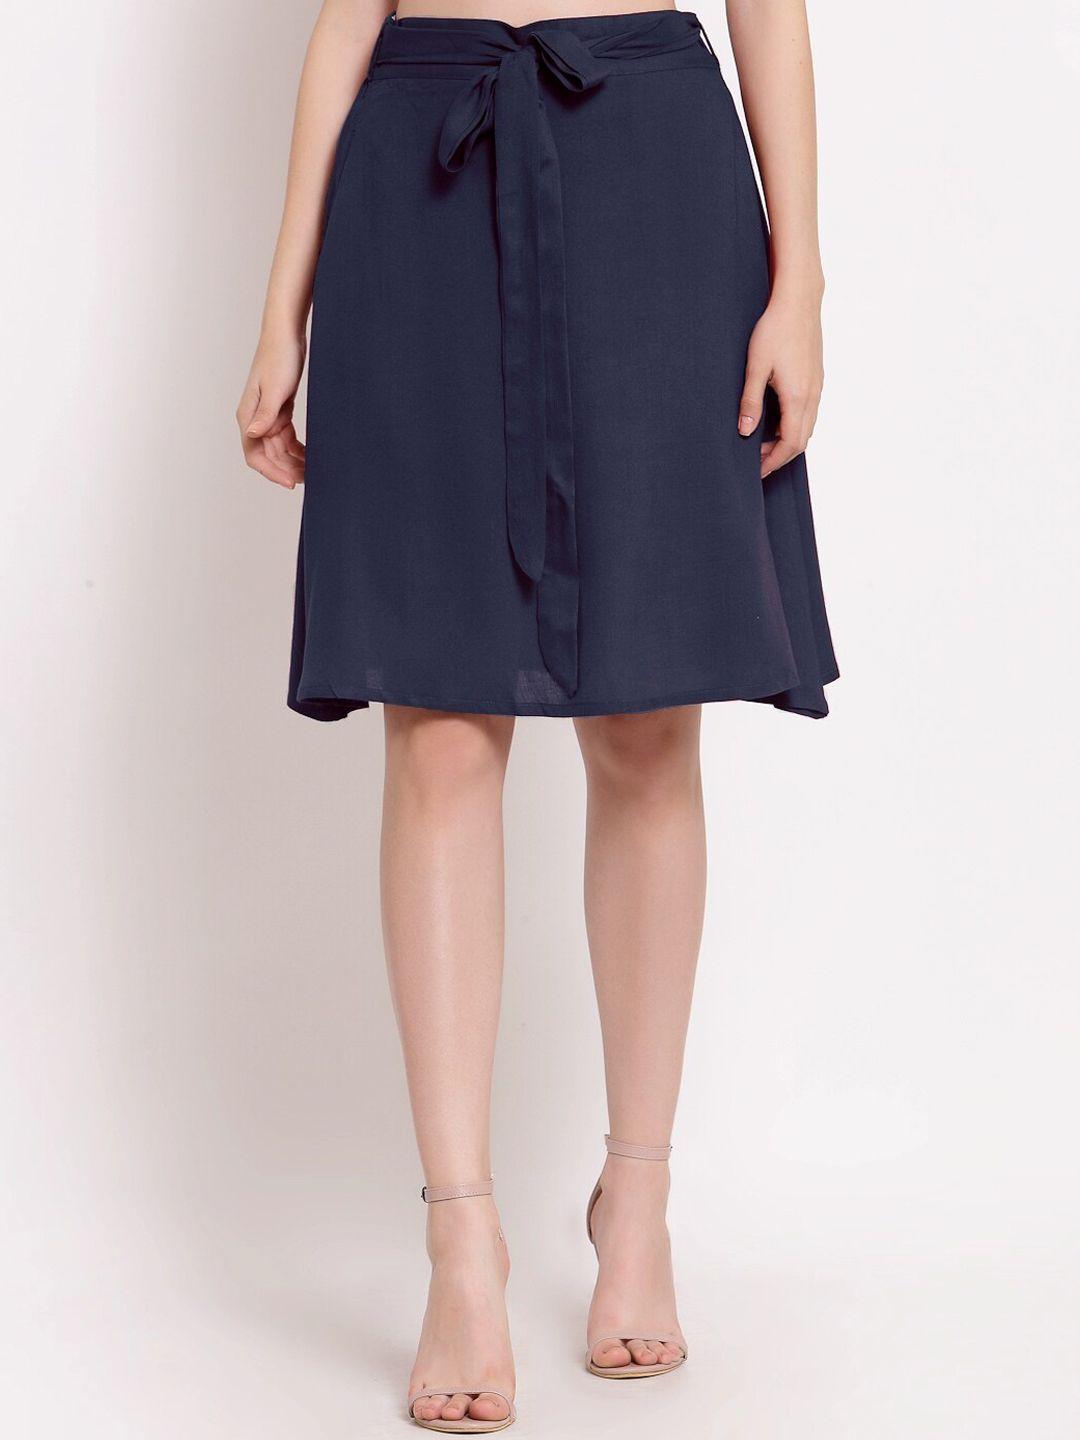 patrorna-women-dark-blue-solid-pleated-a-line-skirt